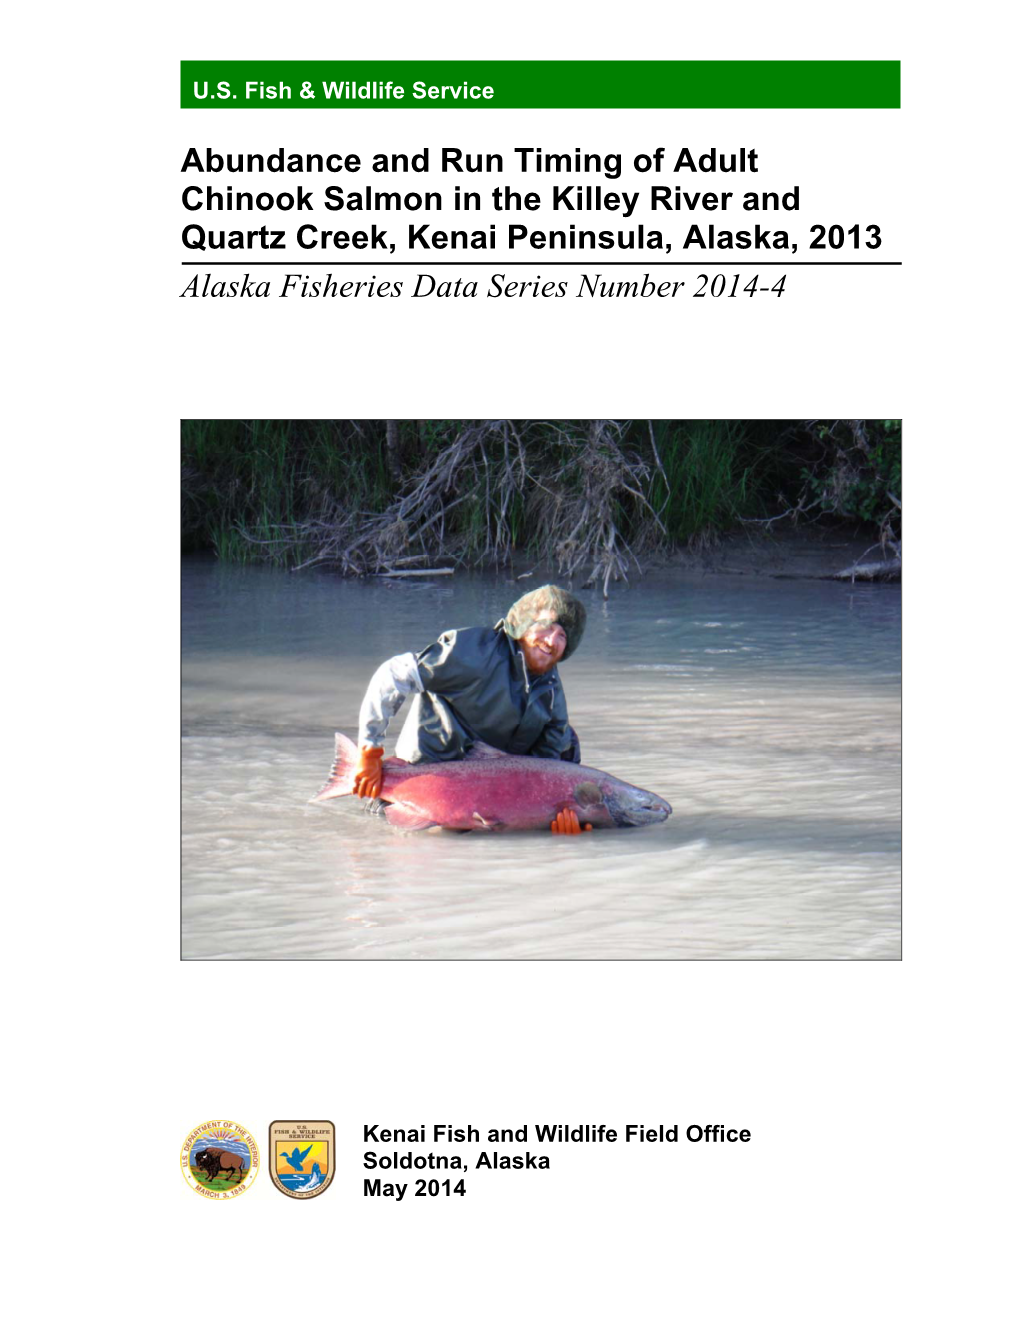 Abundance and Run Timing of Adult Chinook Salmon in the Killey River and Quartz Creek, Kenai Peninsula, Alaska, 2013 Alaska Fisheries Data Series Number 2014-4